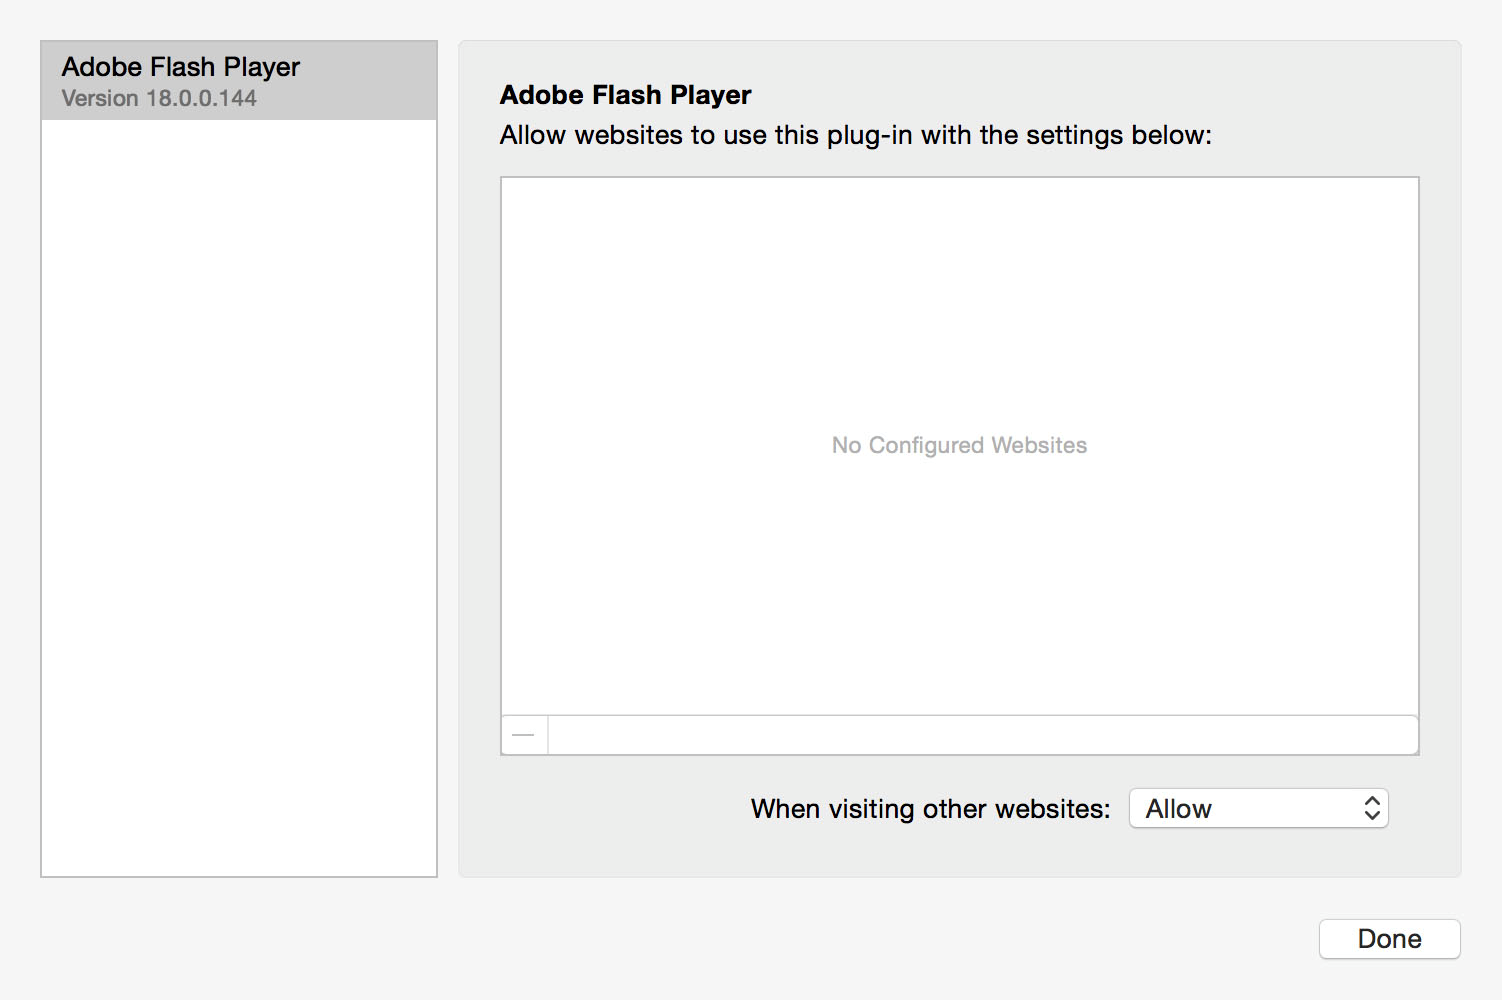 Free Adobe Flash Player Download Mac Os Sierra 10.12.4